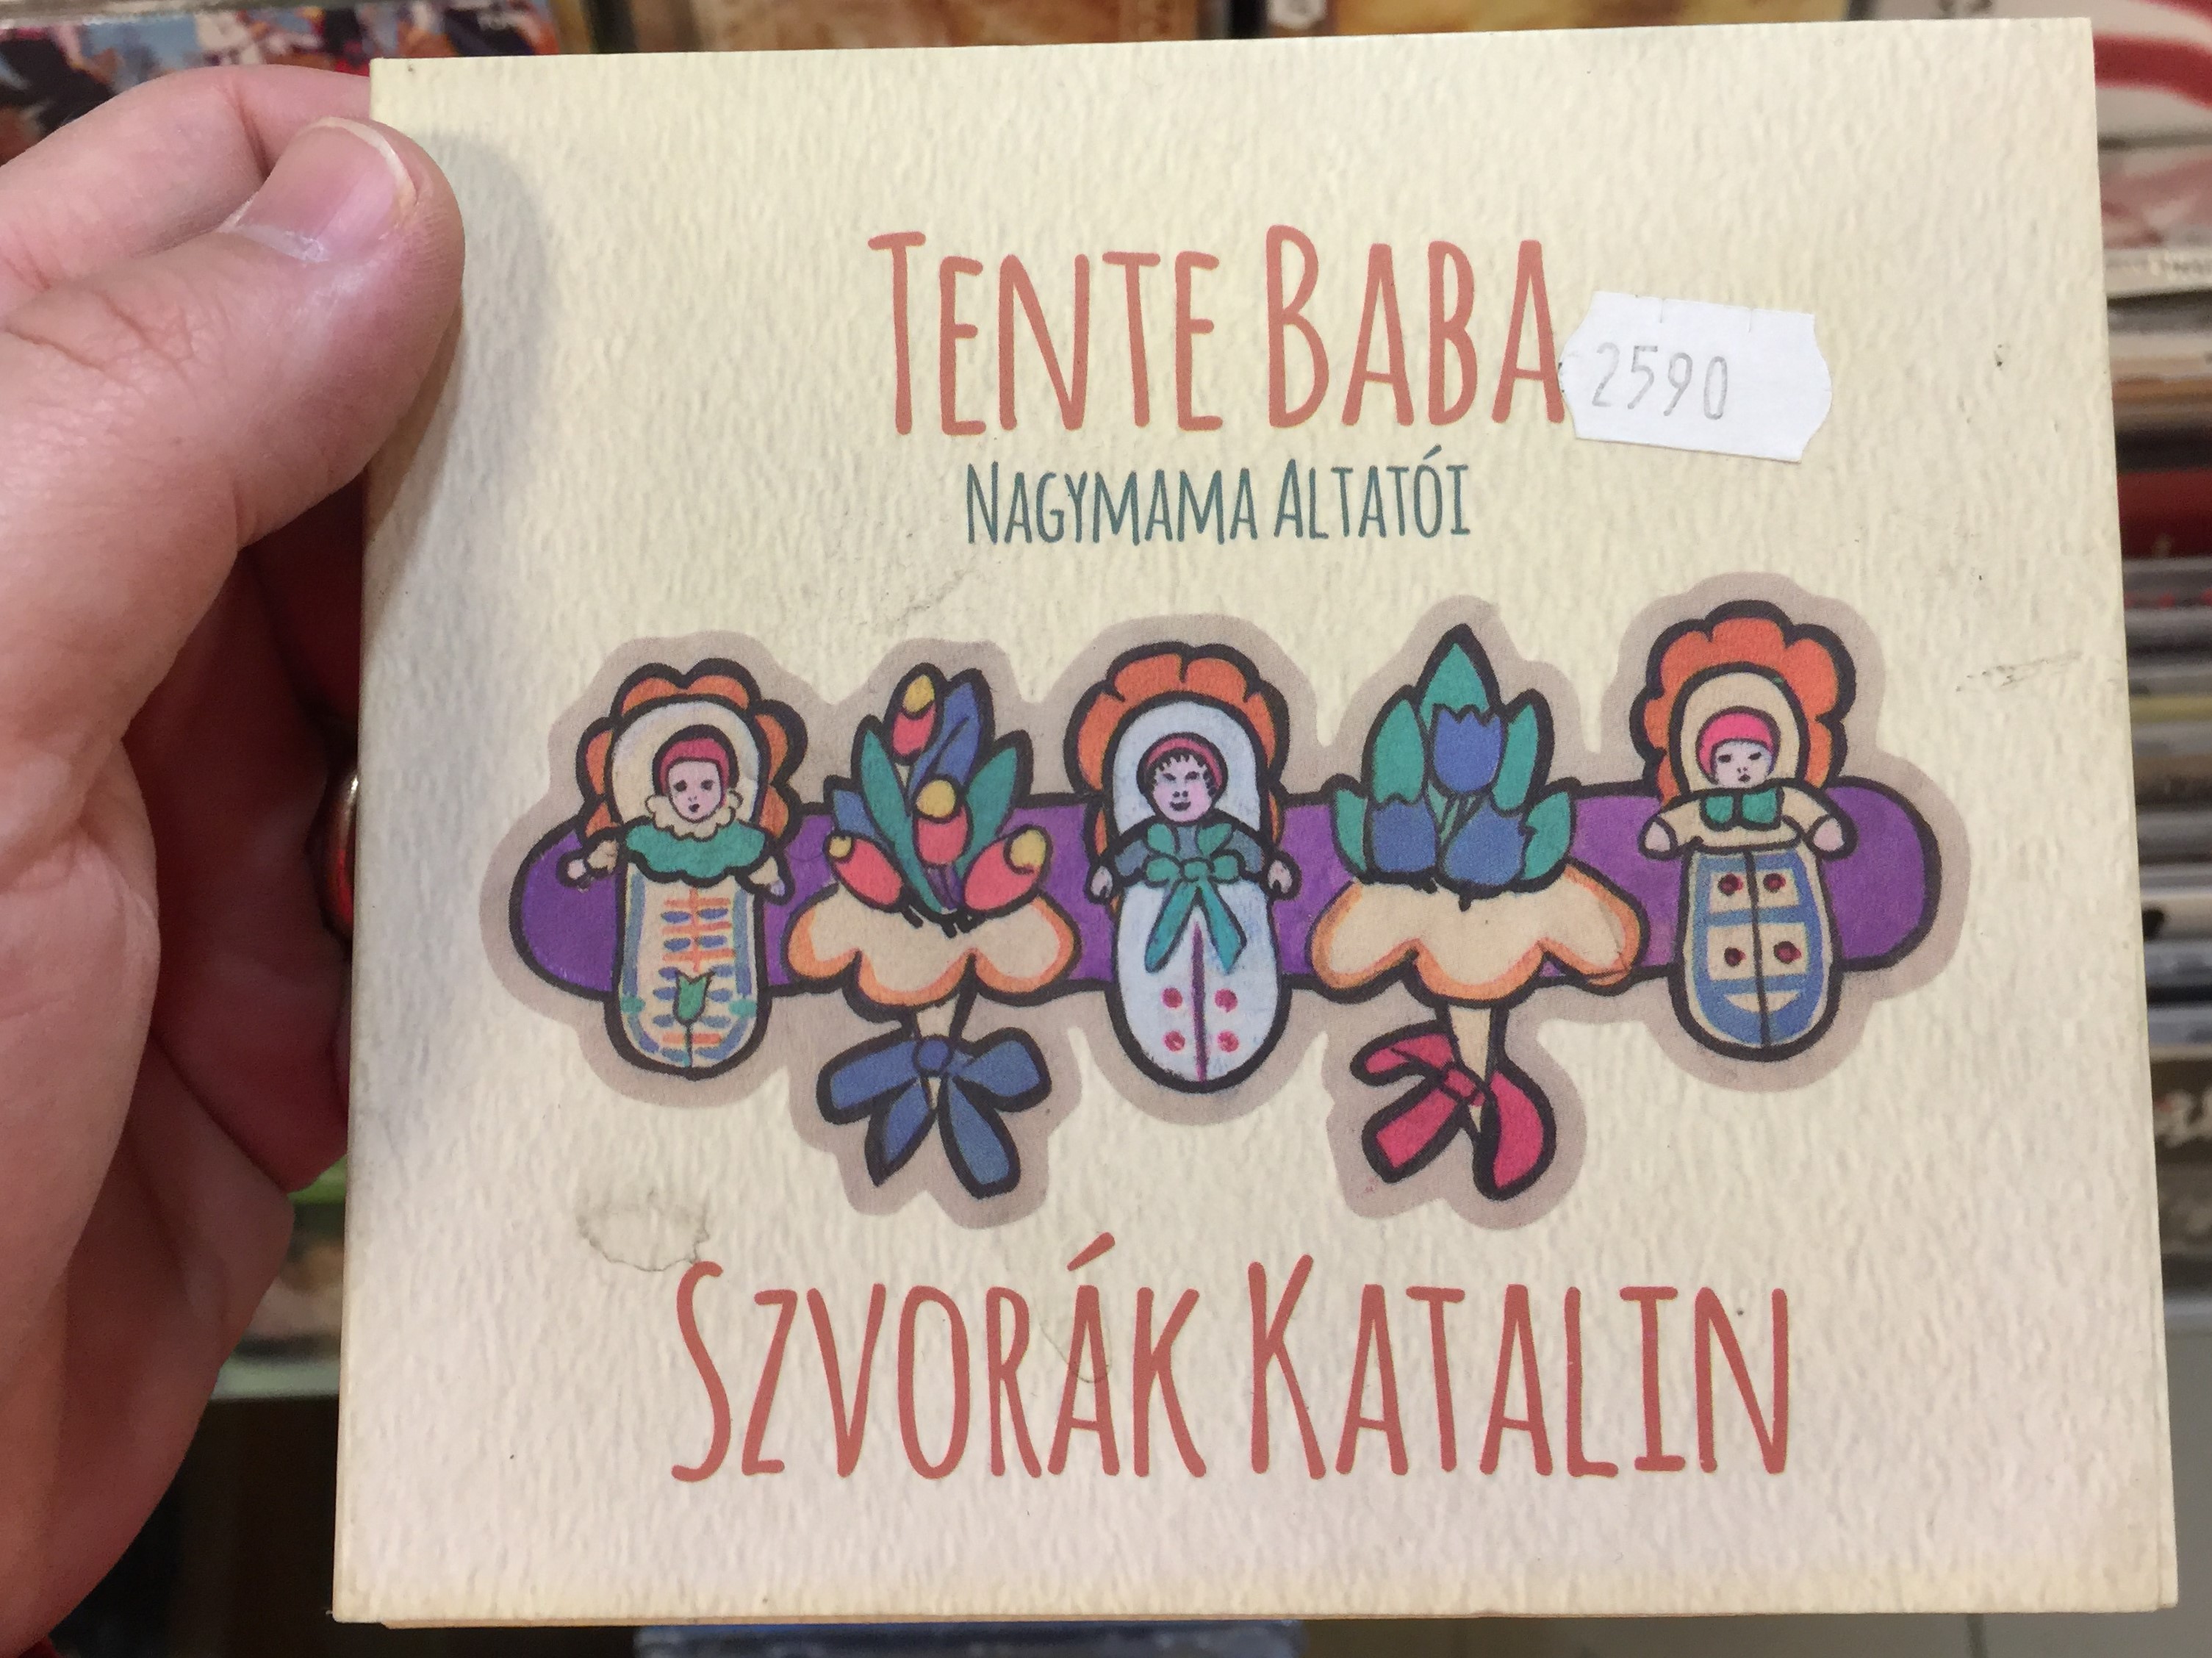 tente-baba-nagymama-altat-i-szvor-k-katalin-rep-audio-cd-2015-rep-031-1-.jpg